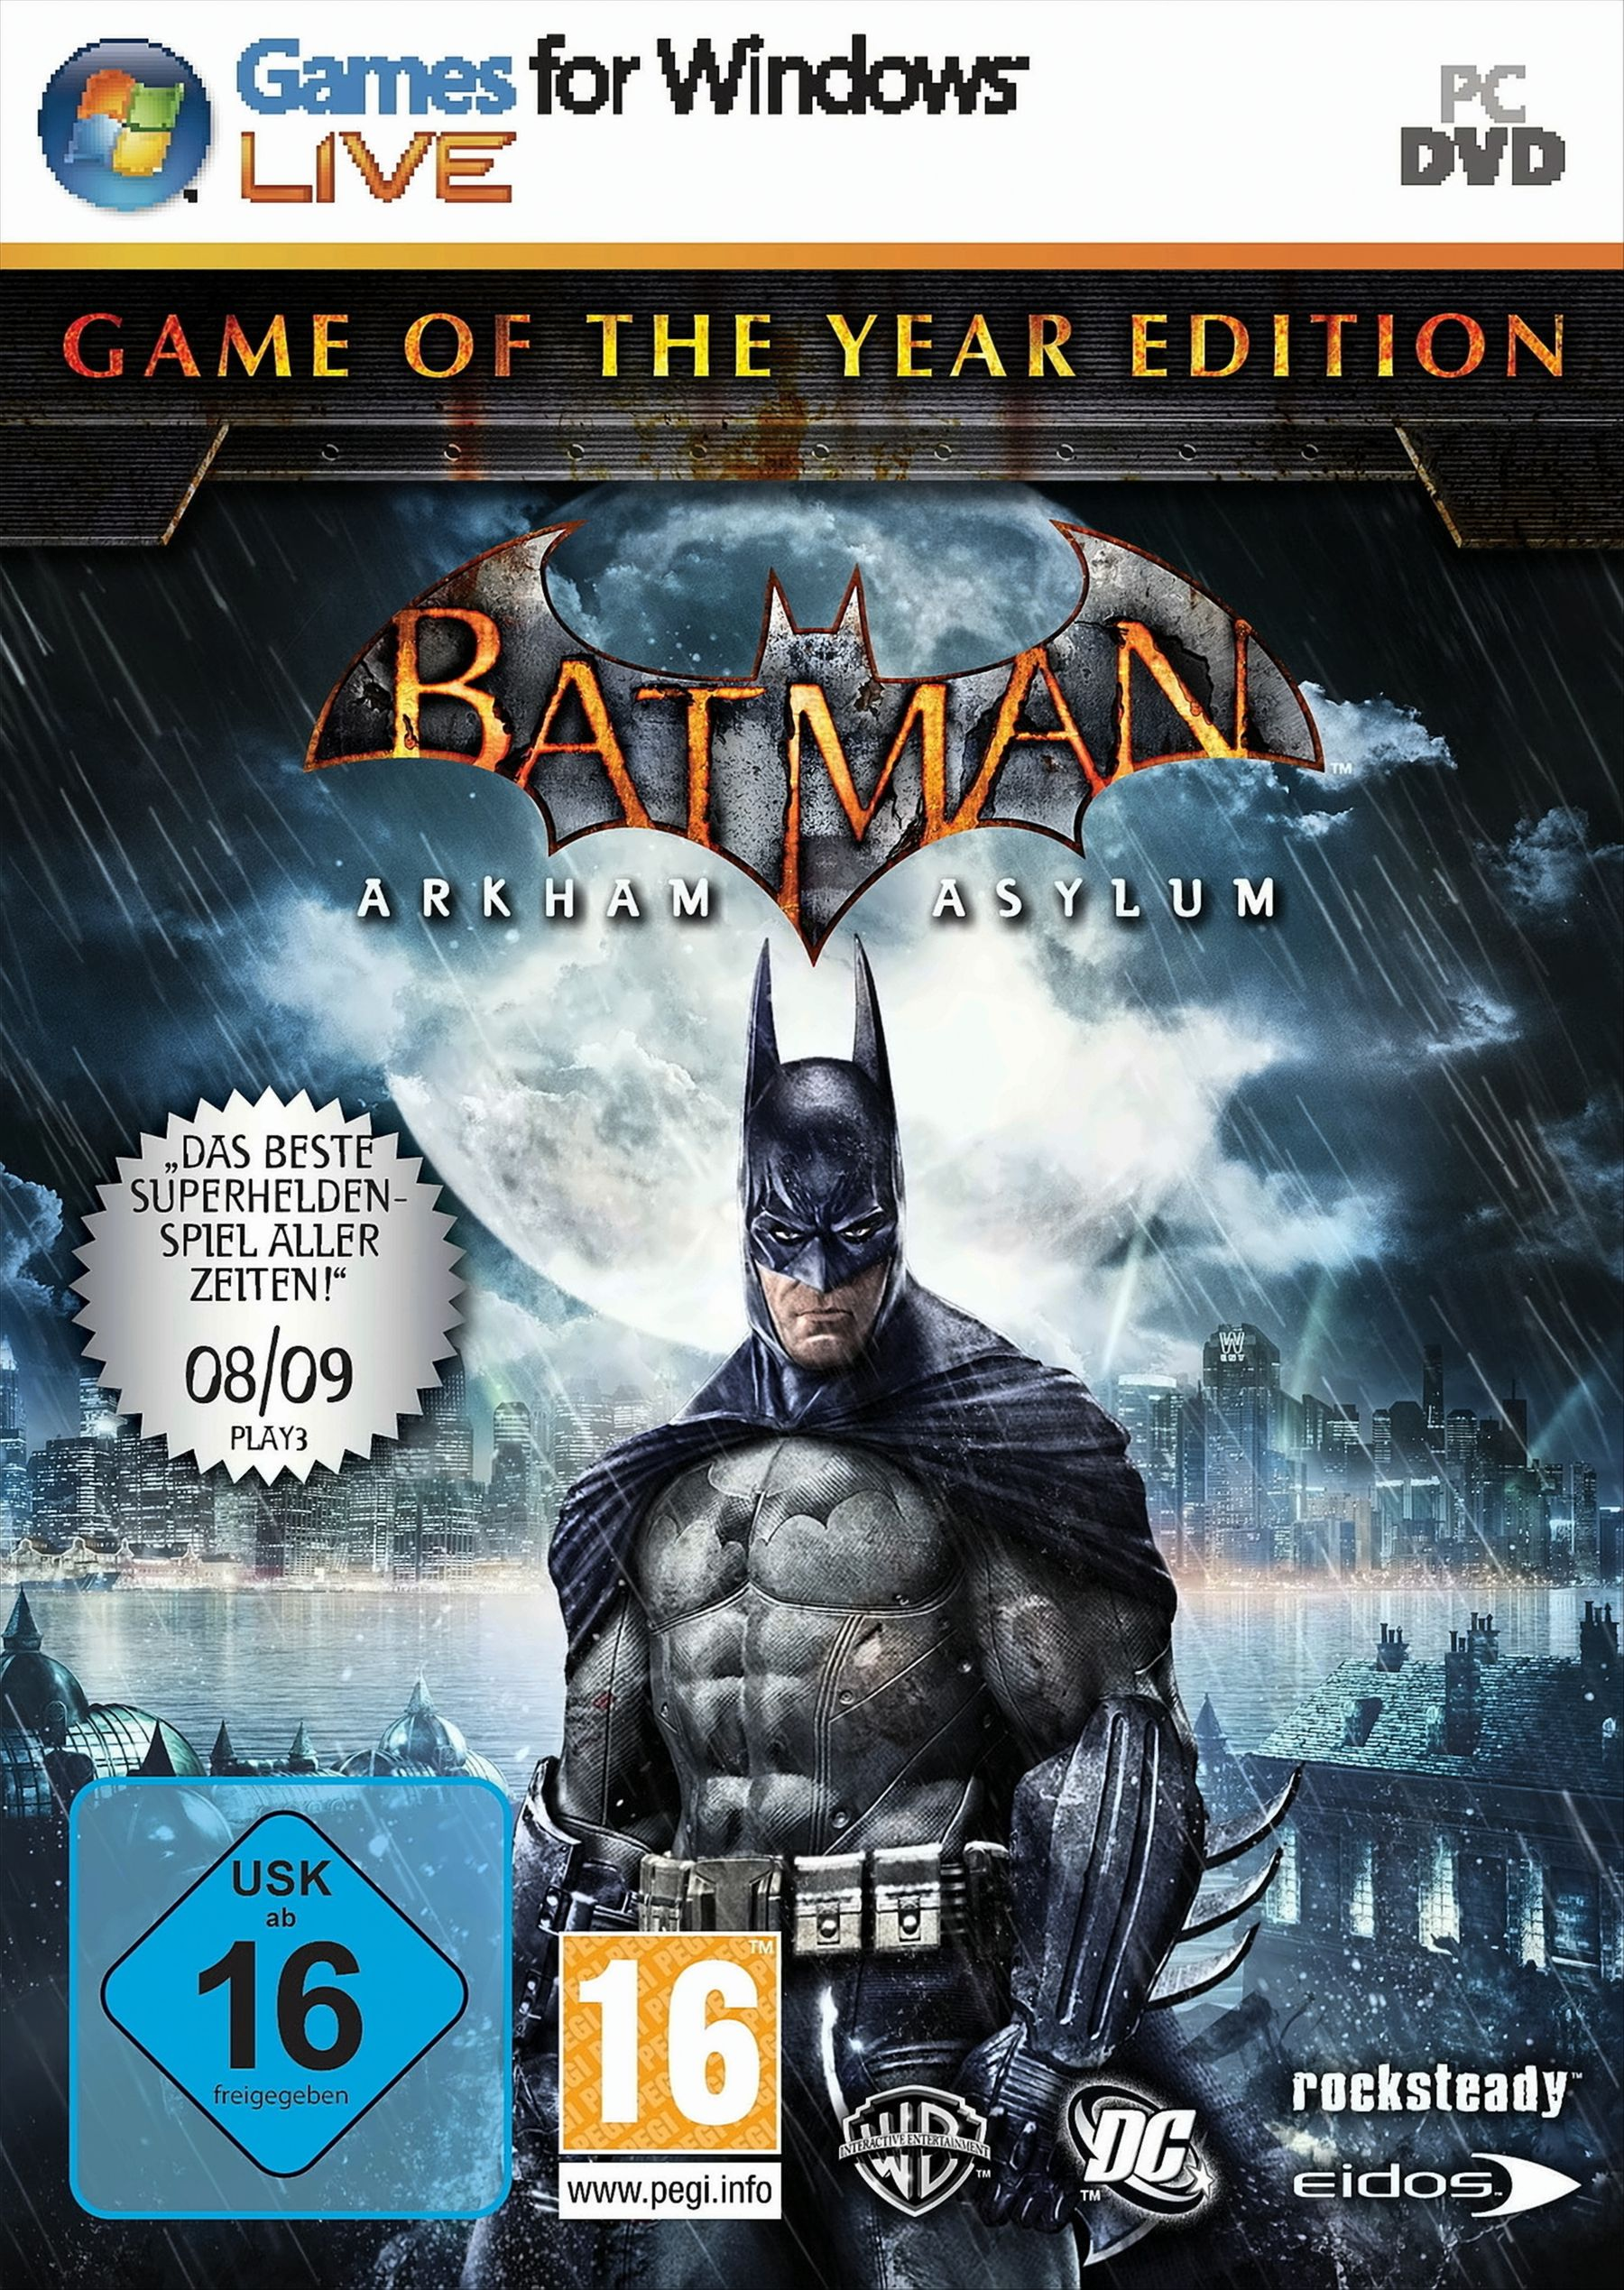 Asylum The [PC] - Of Arkham Batman: Year Game - Edition